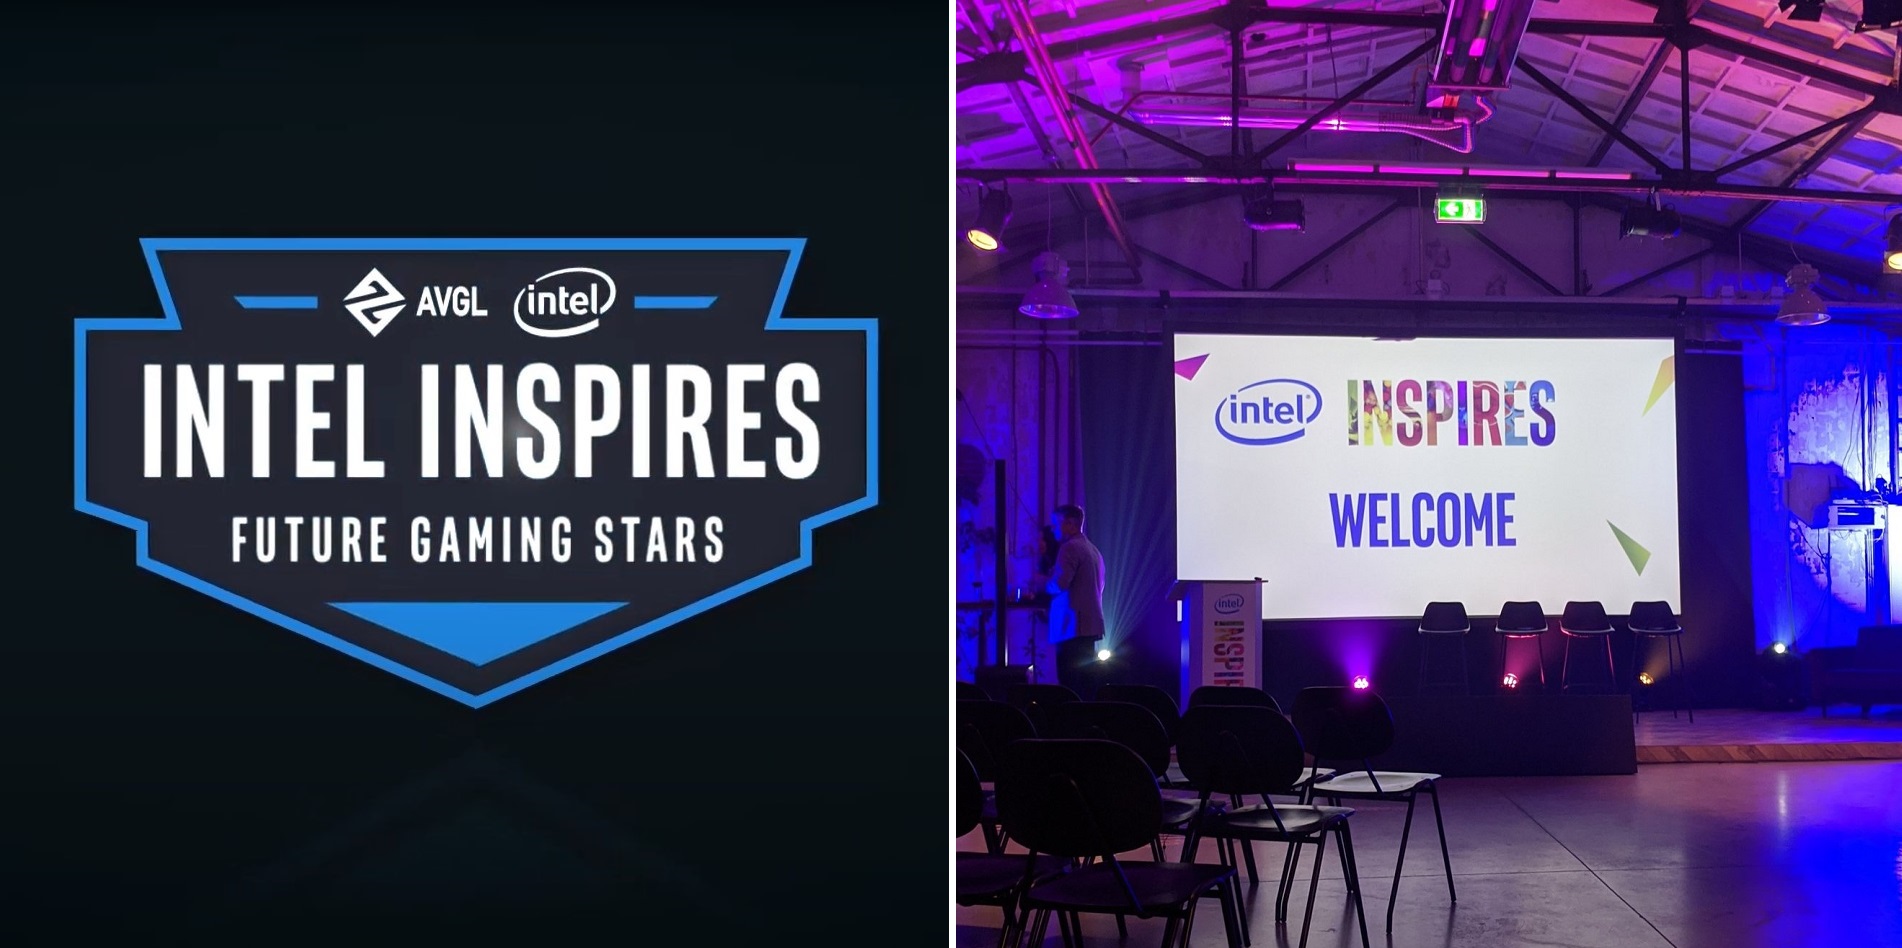 Intel Inspires